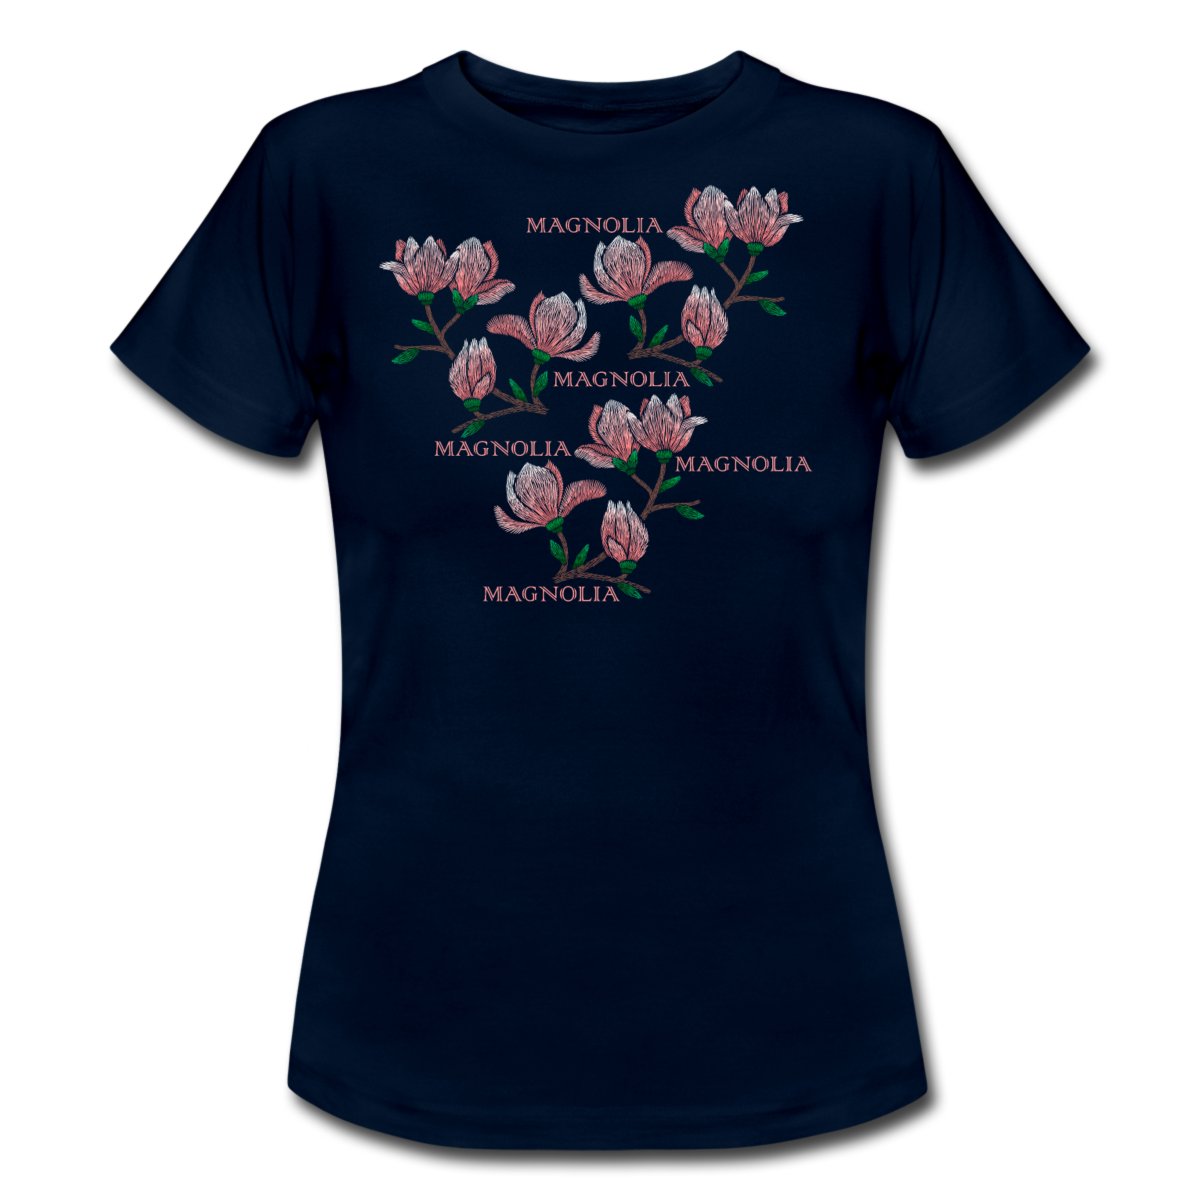 magnolia-t-shirt-dam-mb.jpg